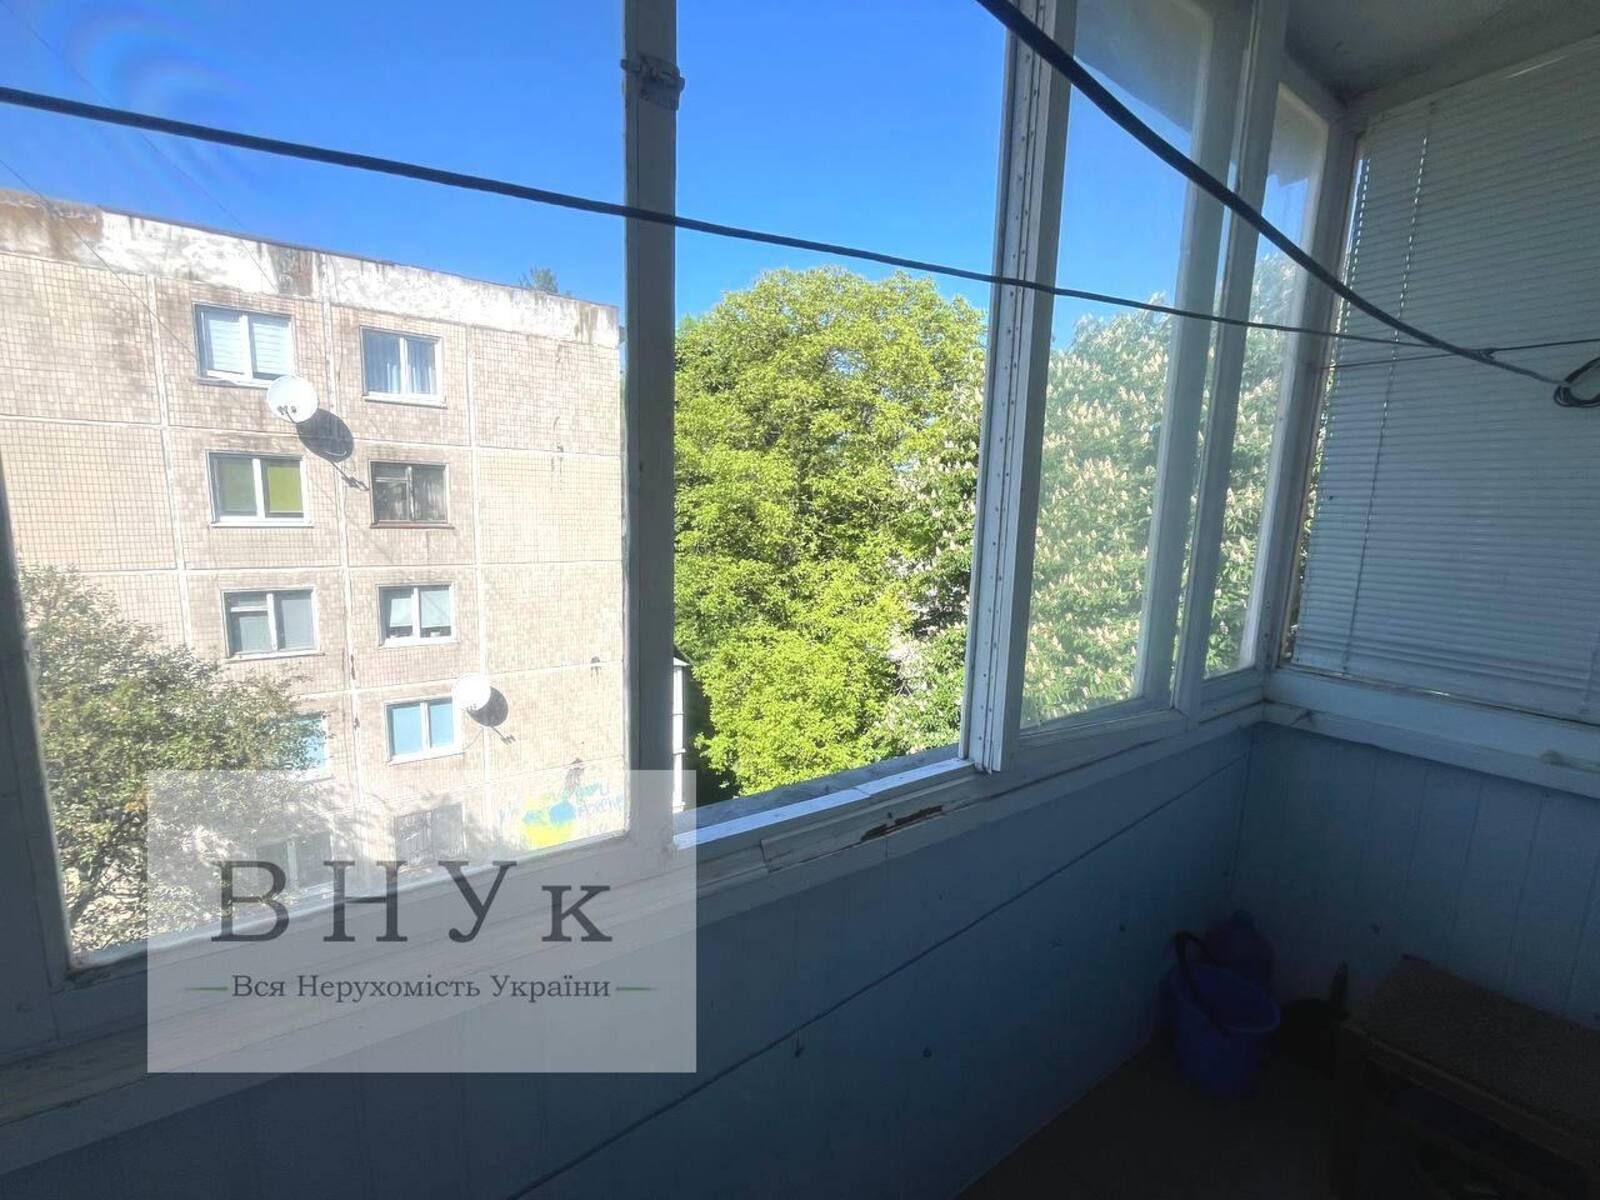 Продам 3-х кімнатну квартиру у мальовничому куточку Тернополя